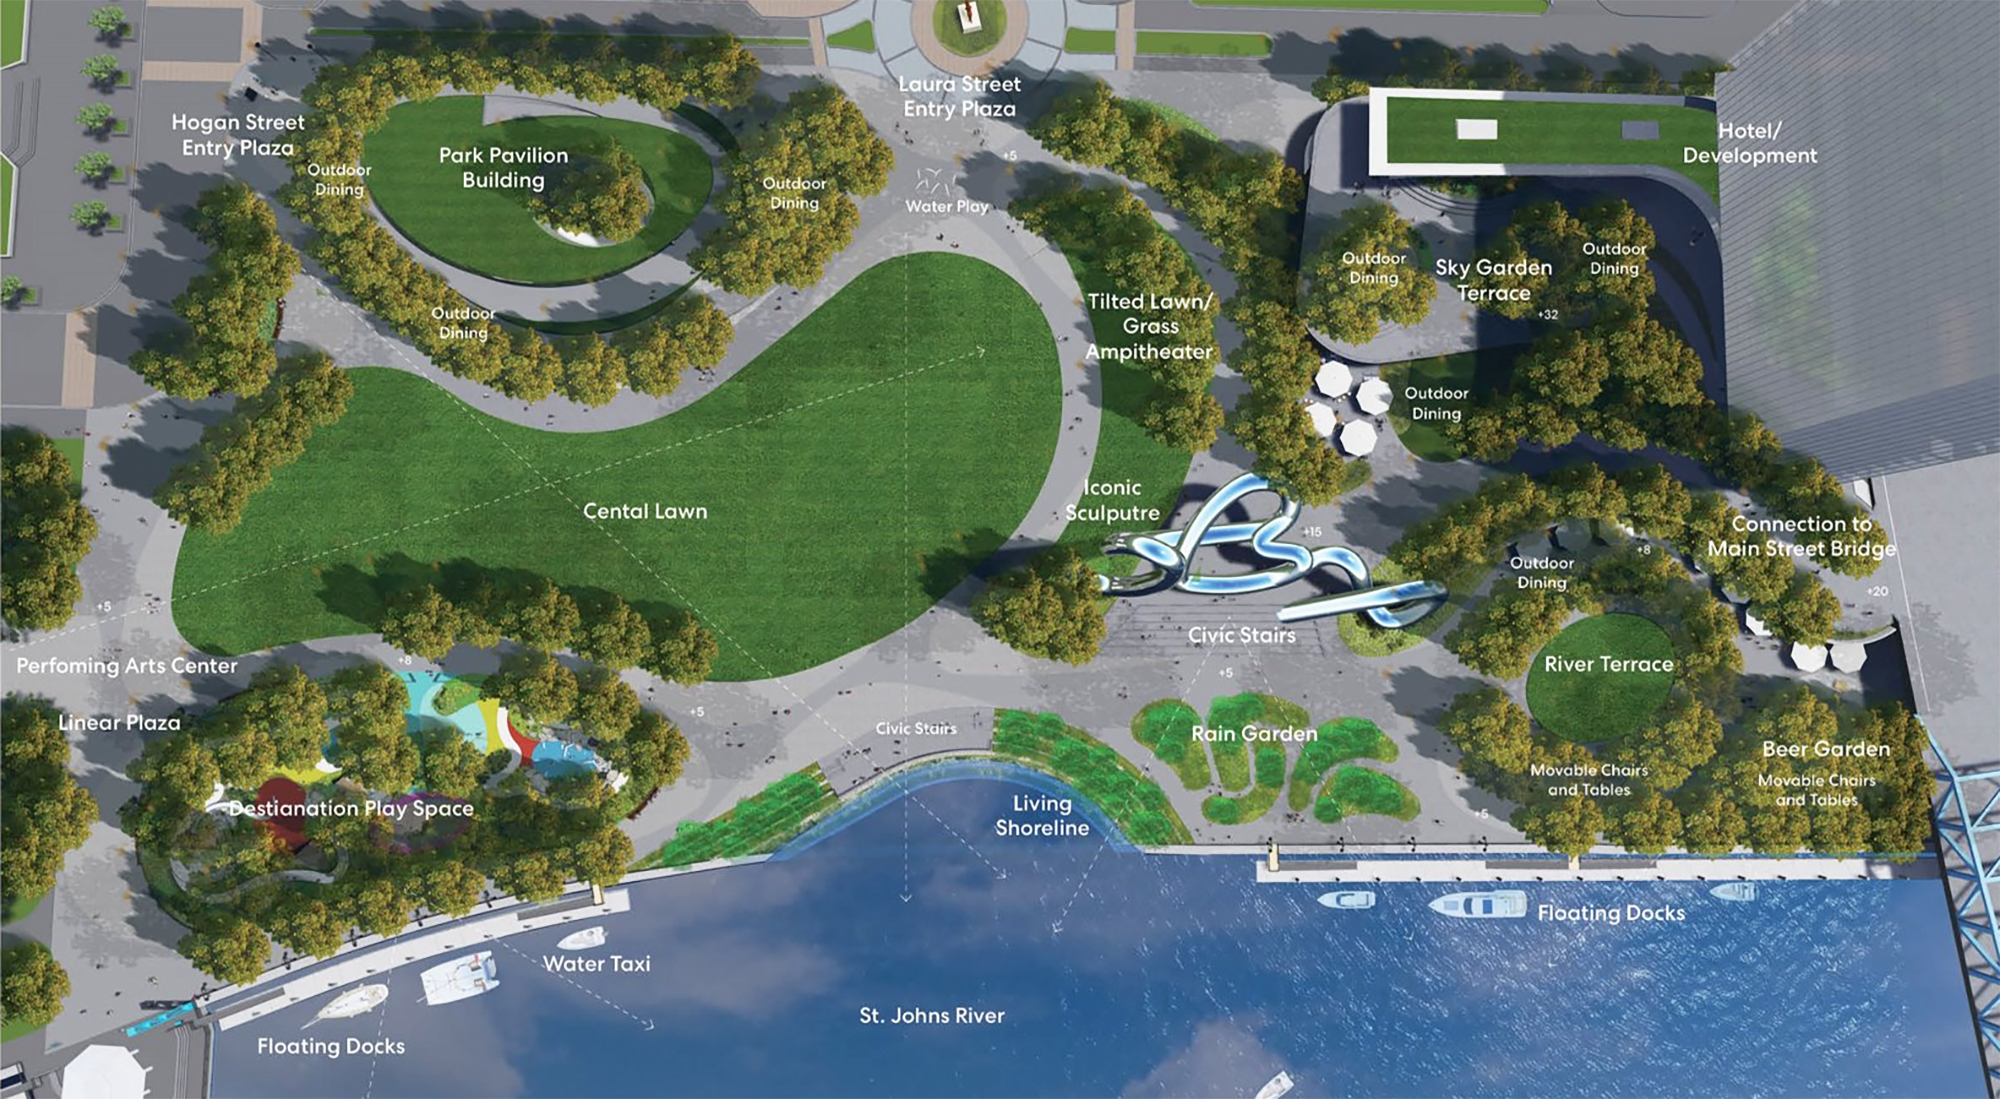 An overhead of the park plan.